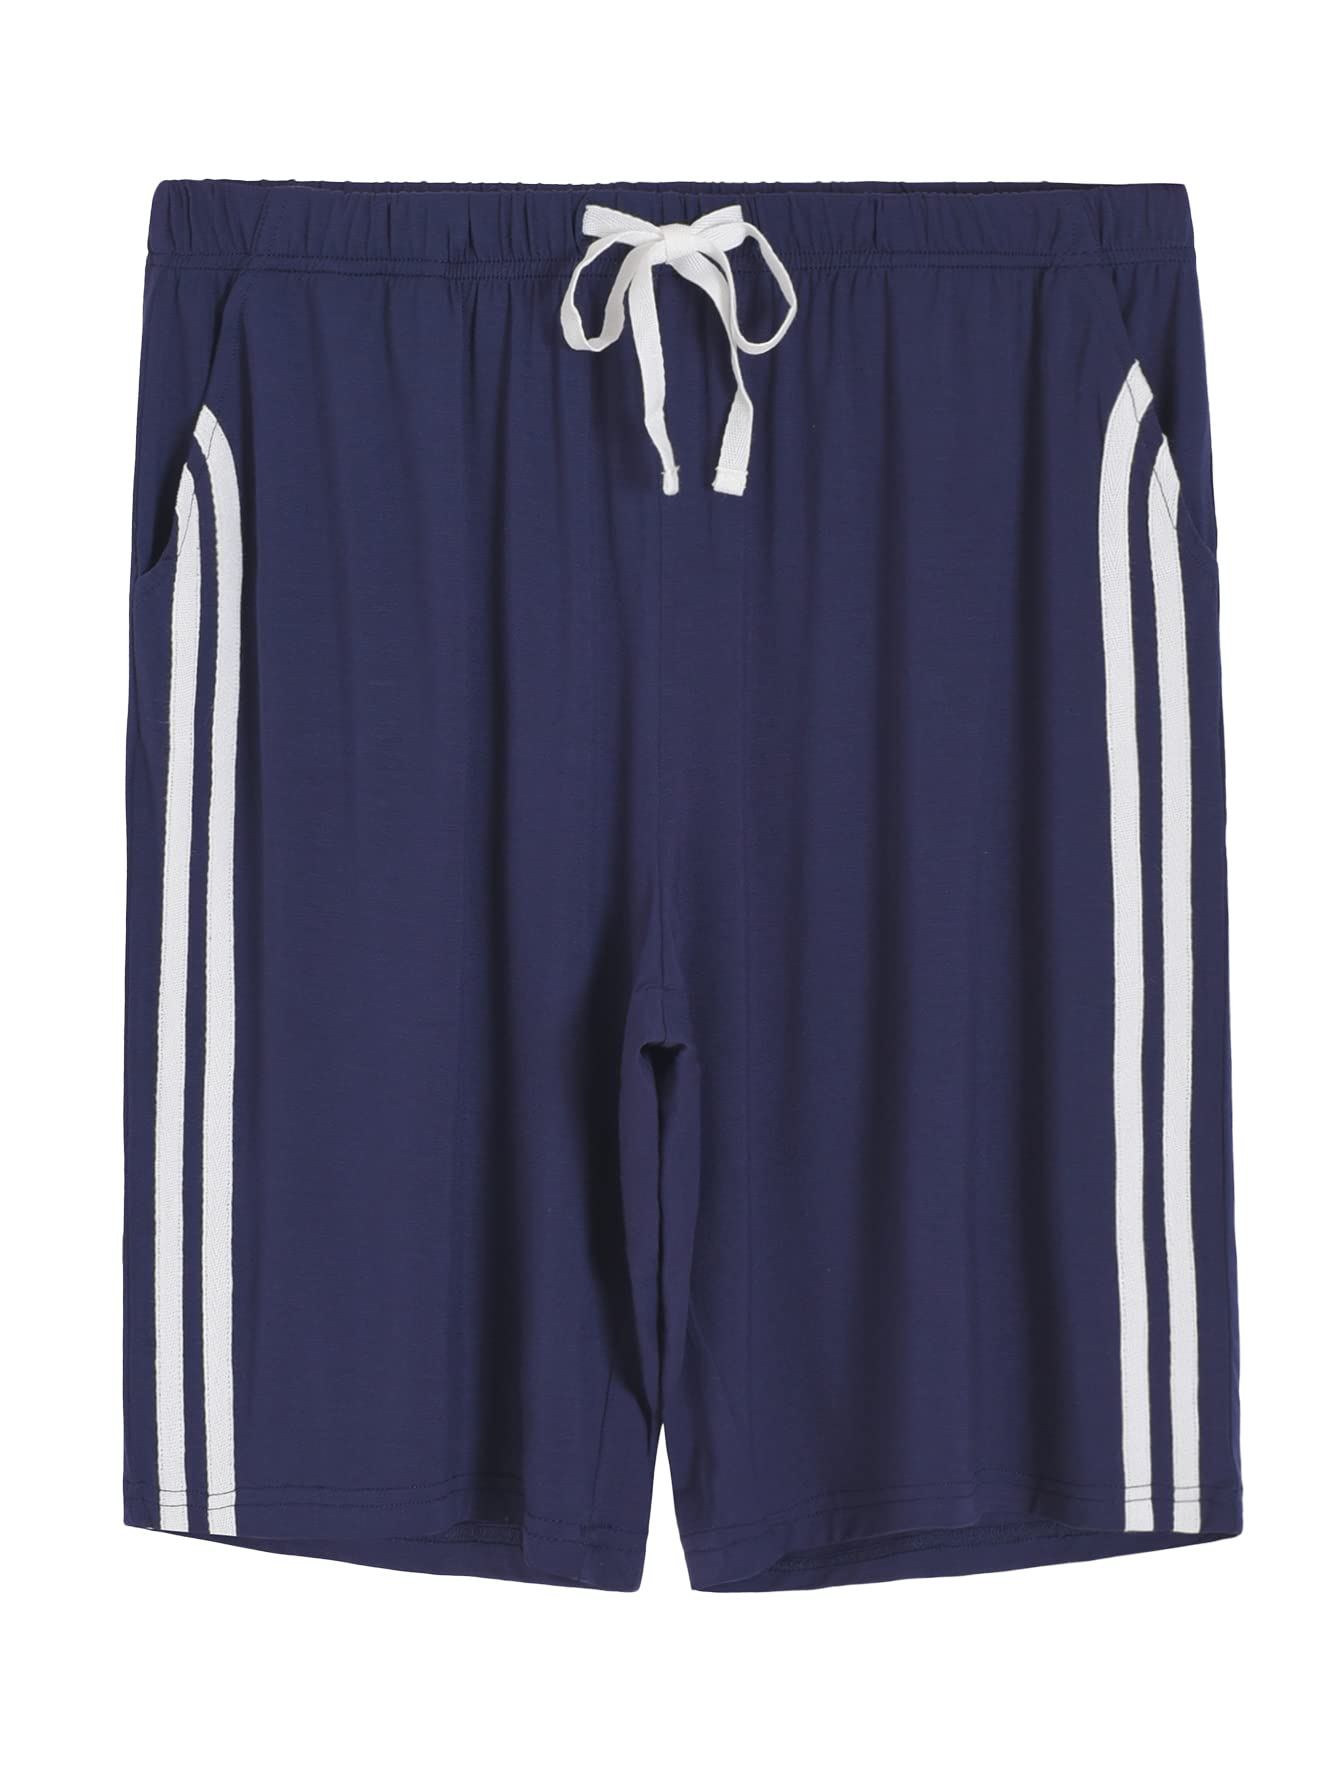 Women's Bamboo Viscose Lounge Bermuda Pajama Shorts with Pockets - Latuza